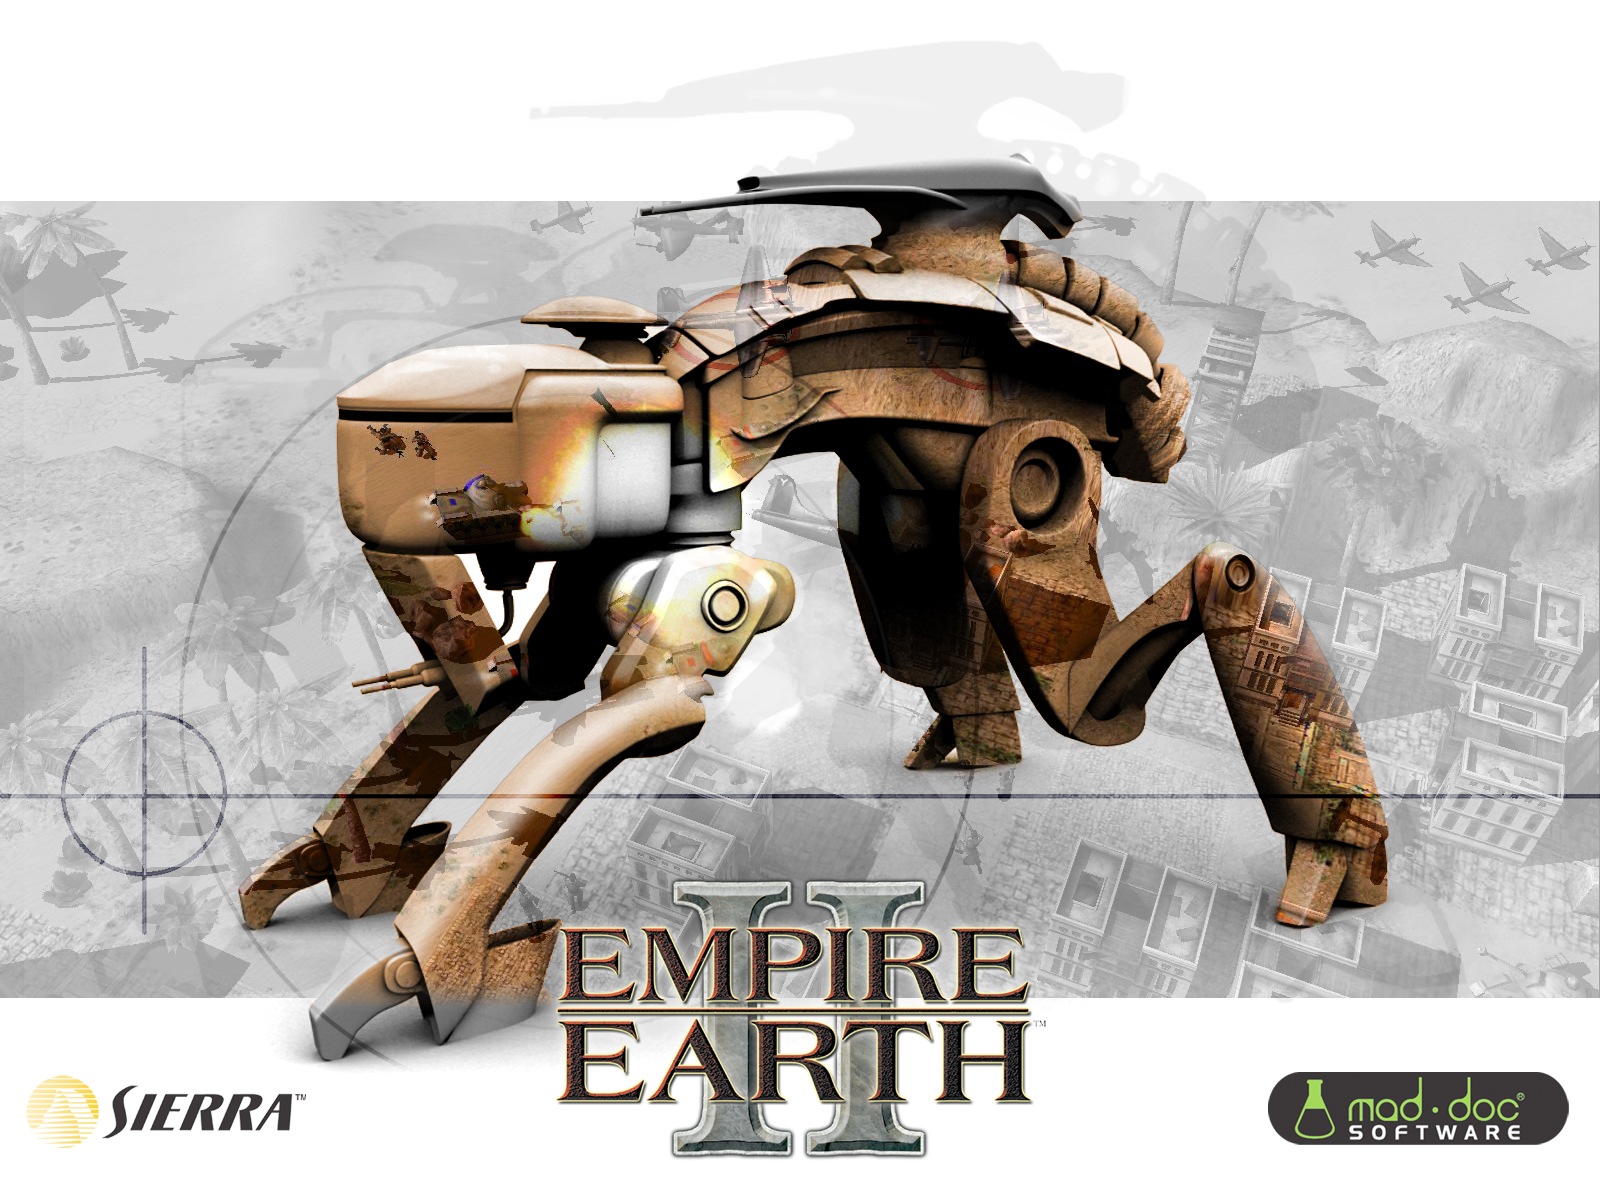 Descargar fondos de escritorio de Empire Earth HD